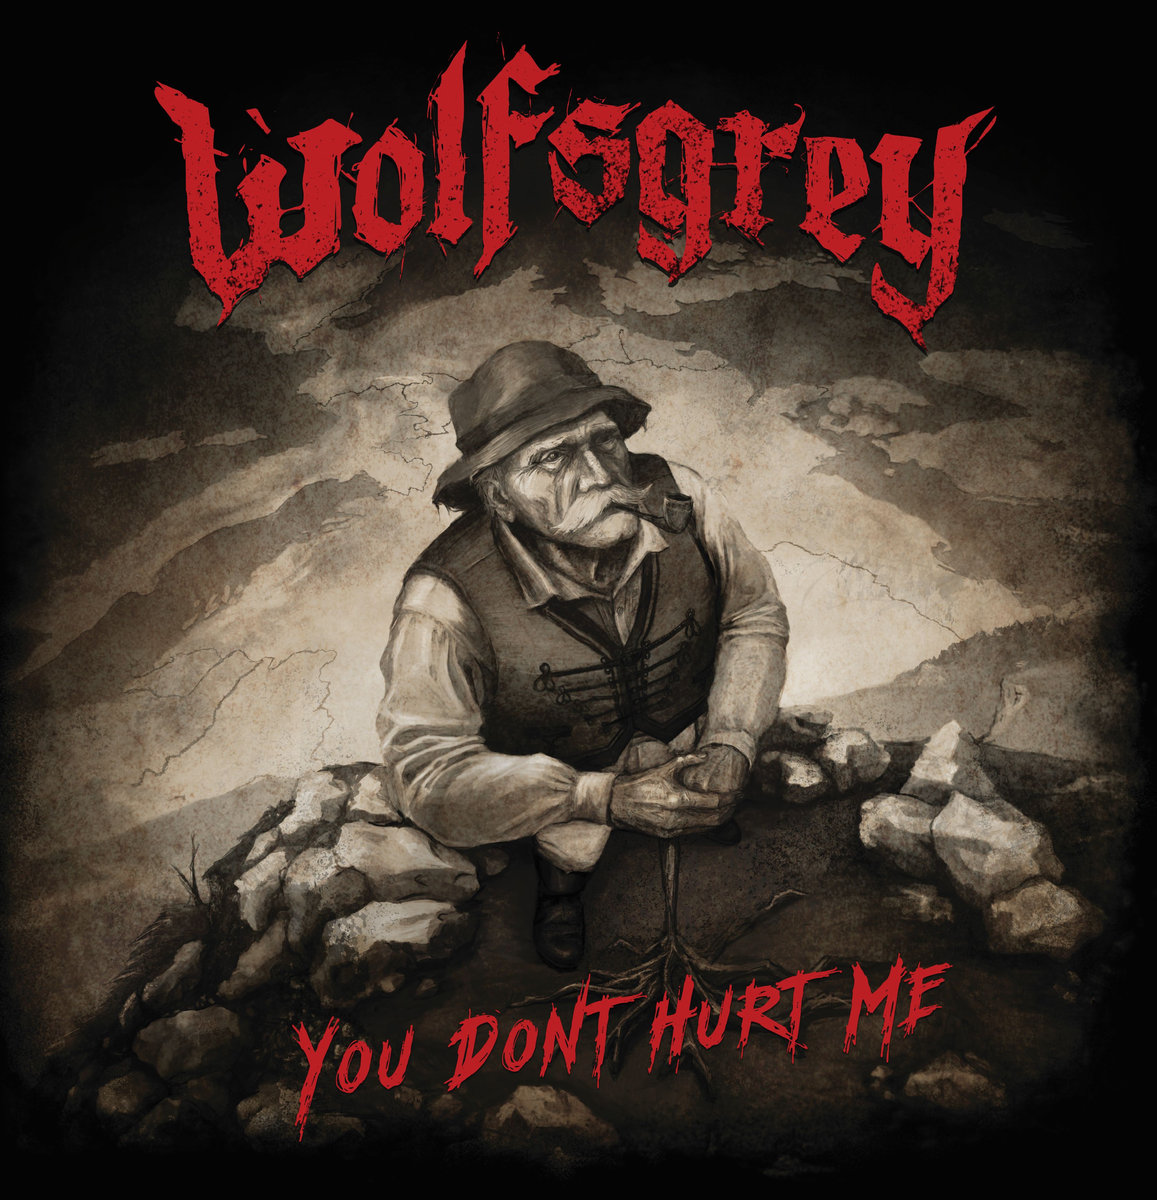 Wolfsgrey – You Don’t Hurt Me